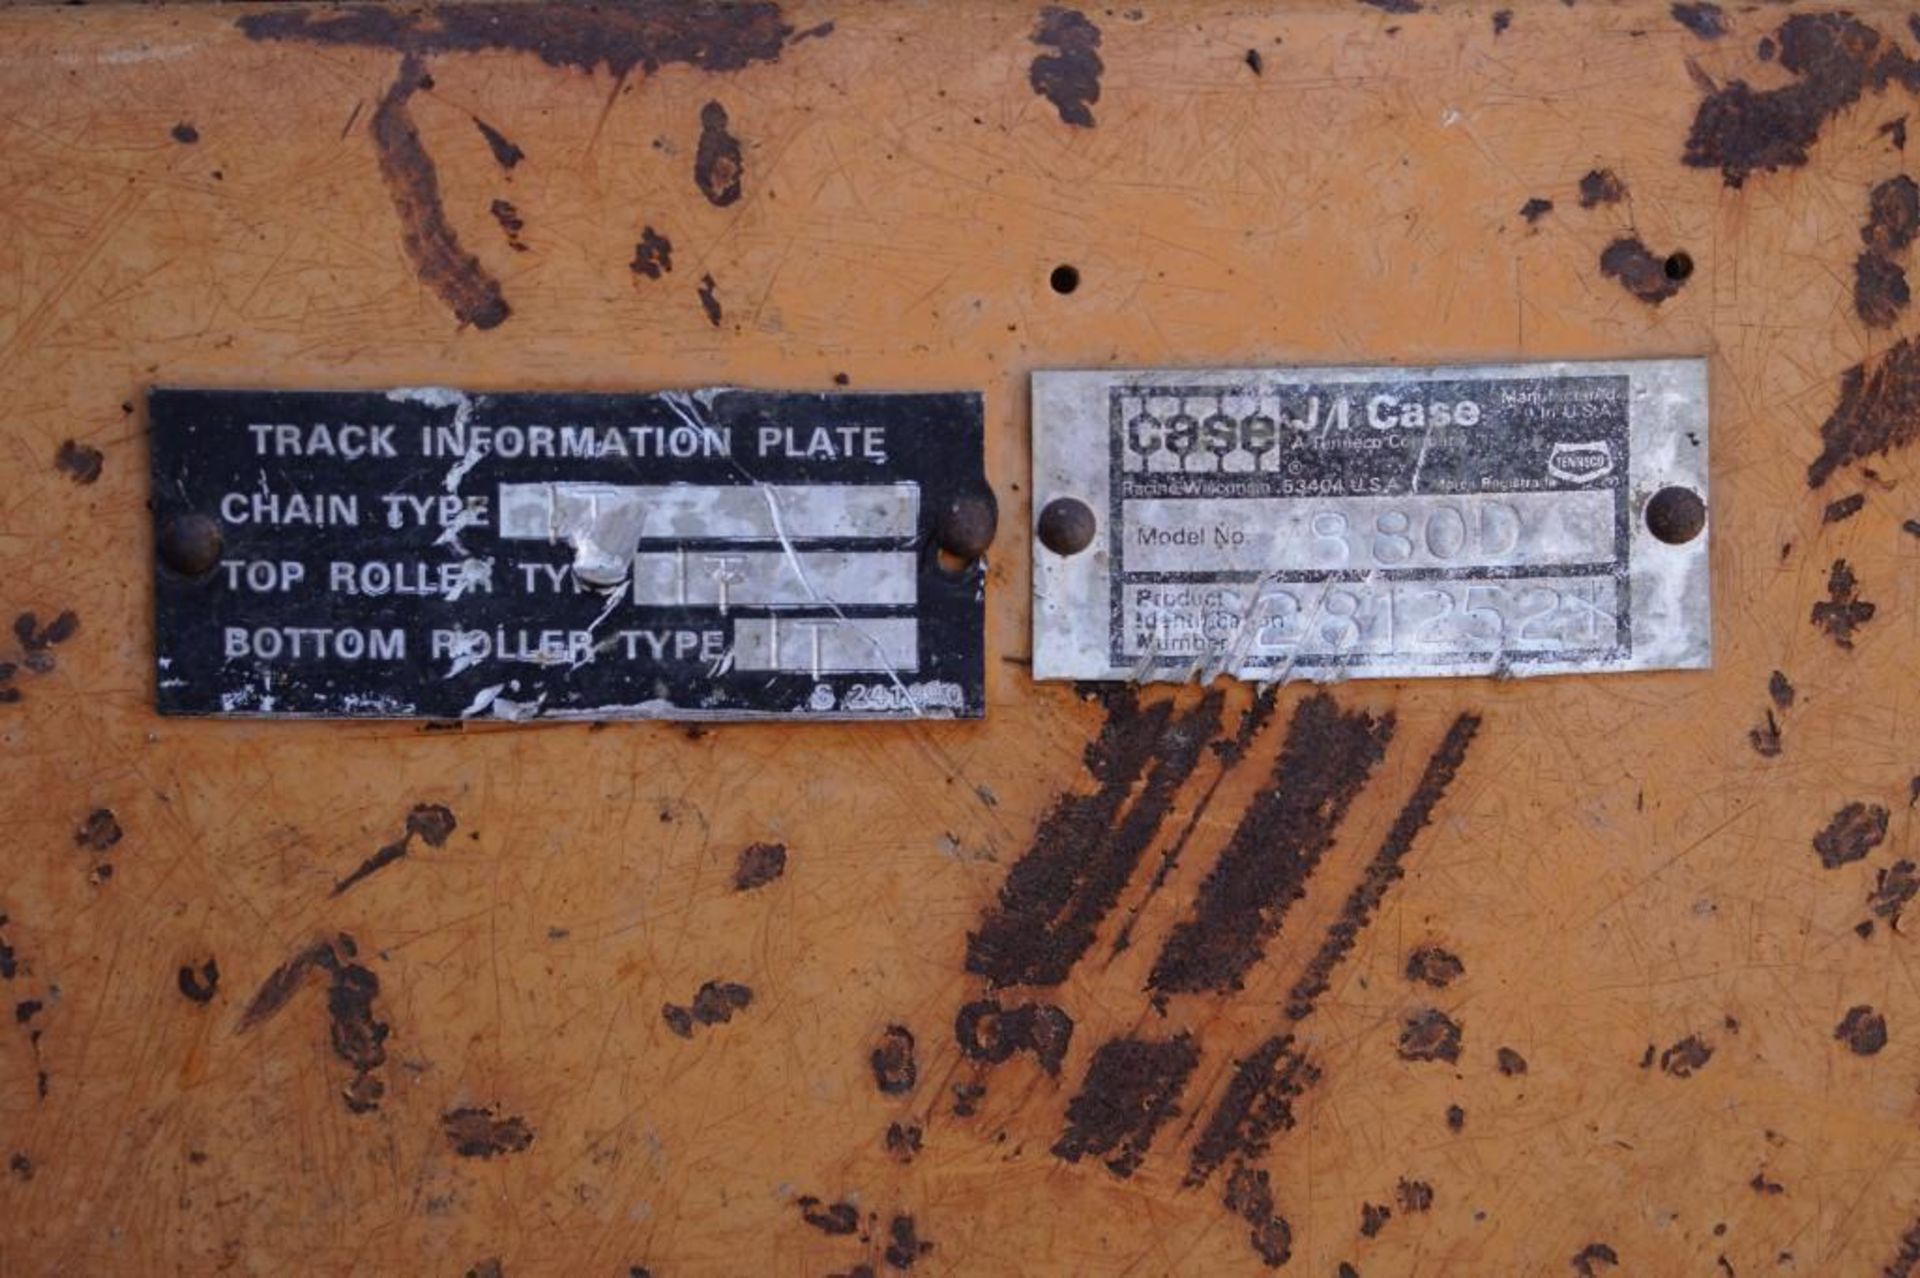 1984 Case 880D Excavator - Image 45 of 53